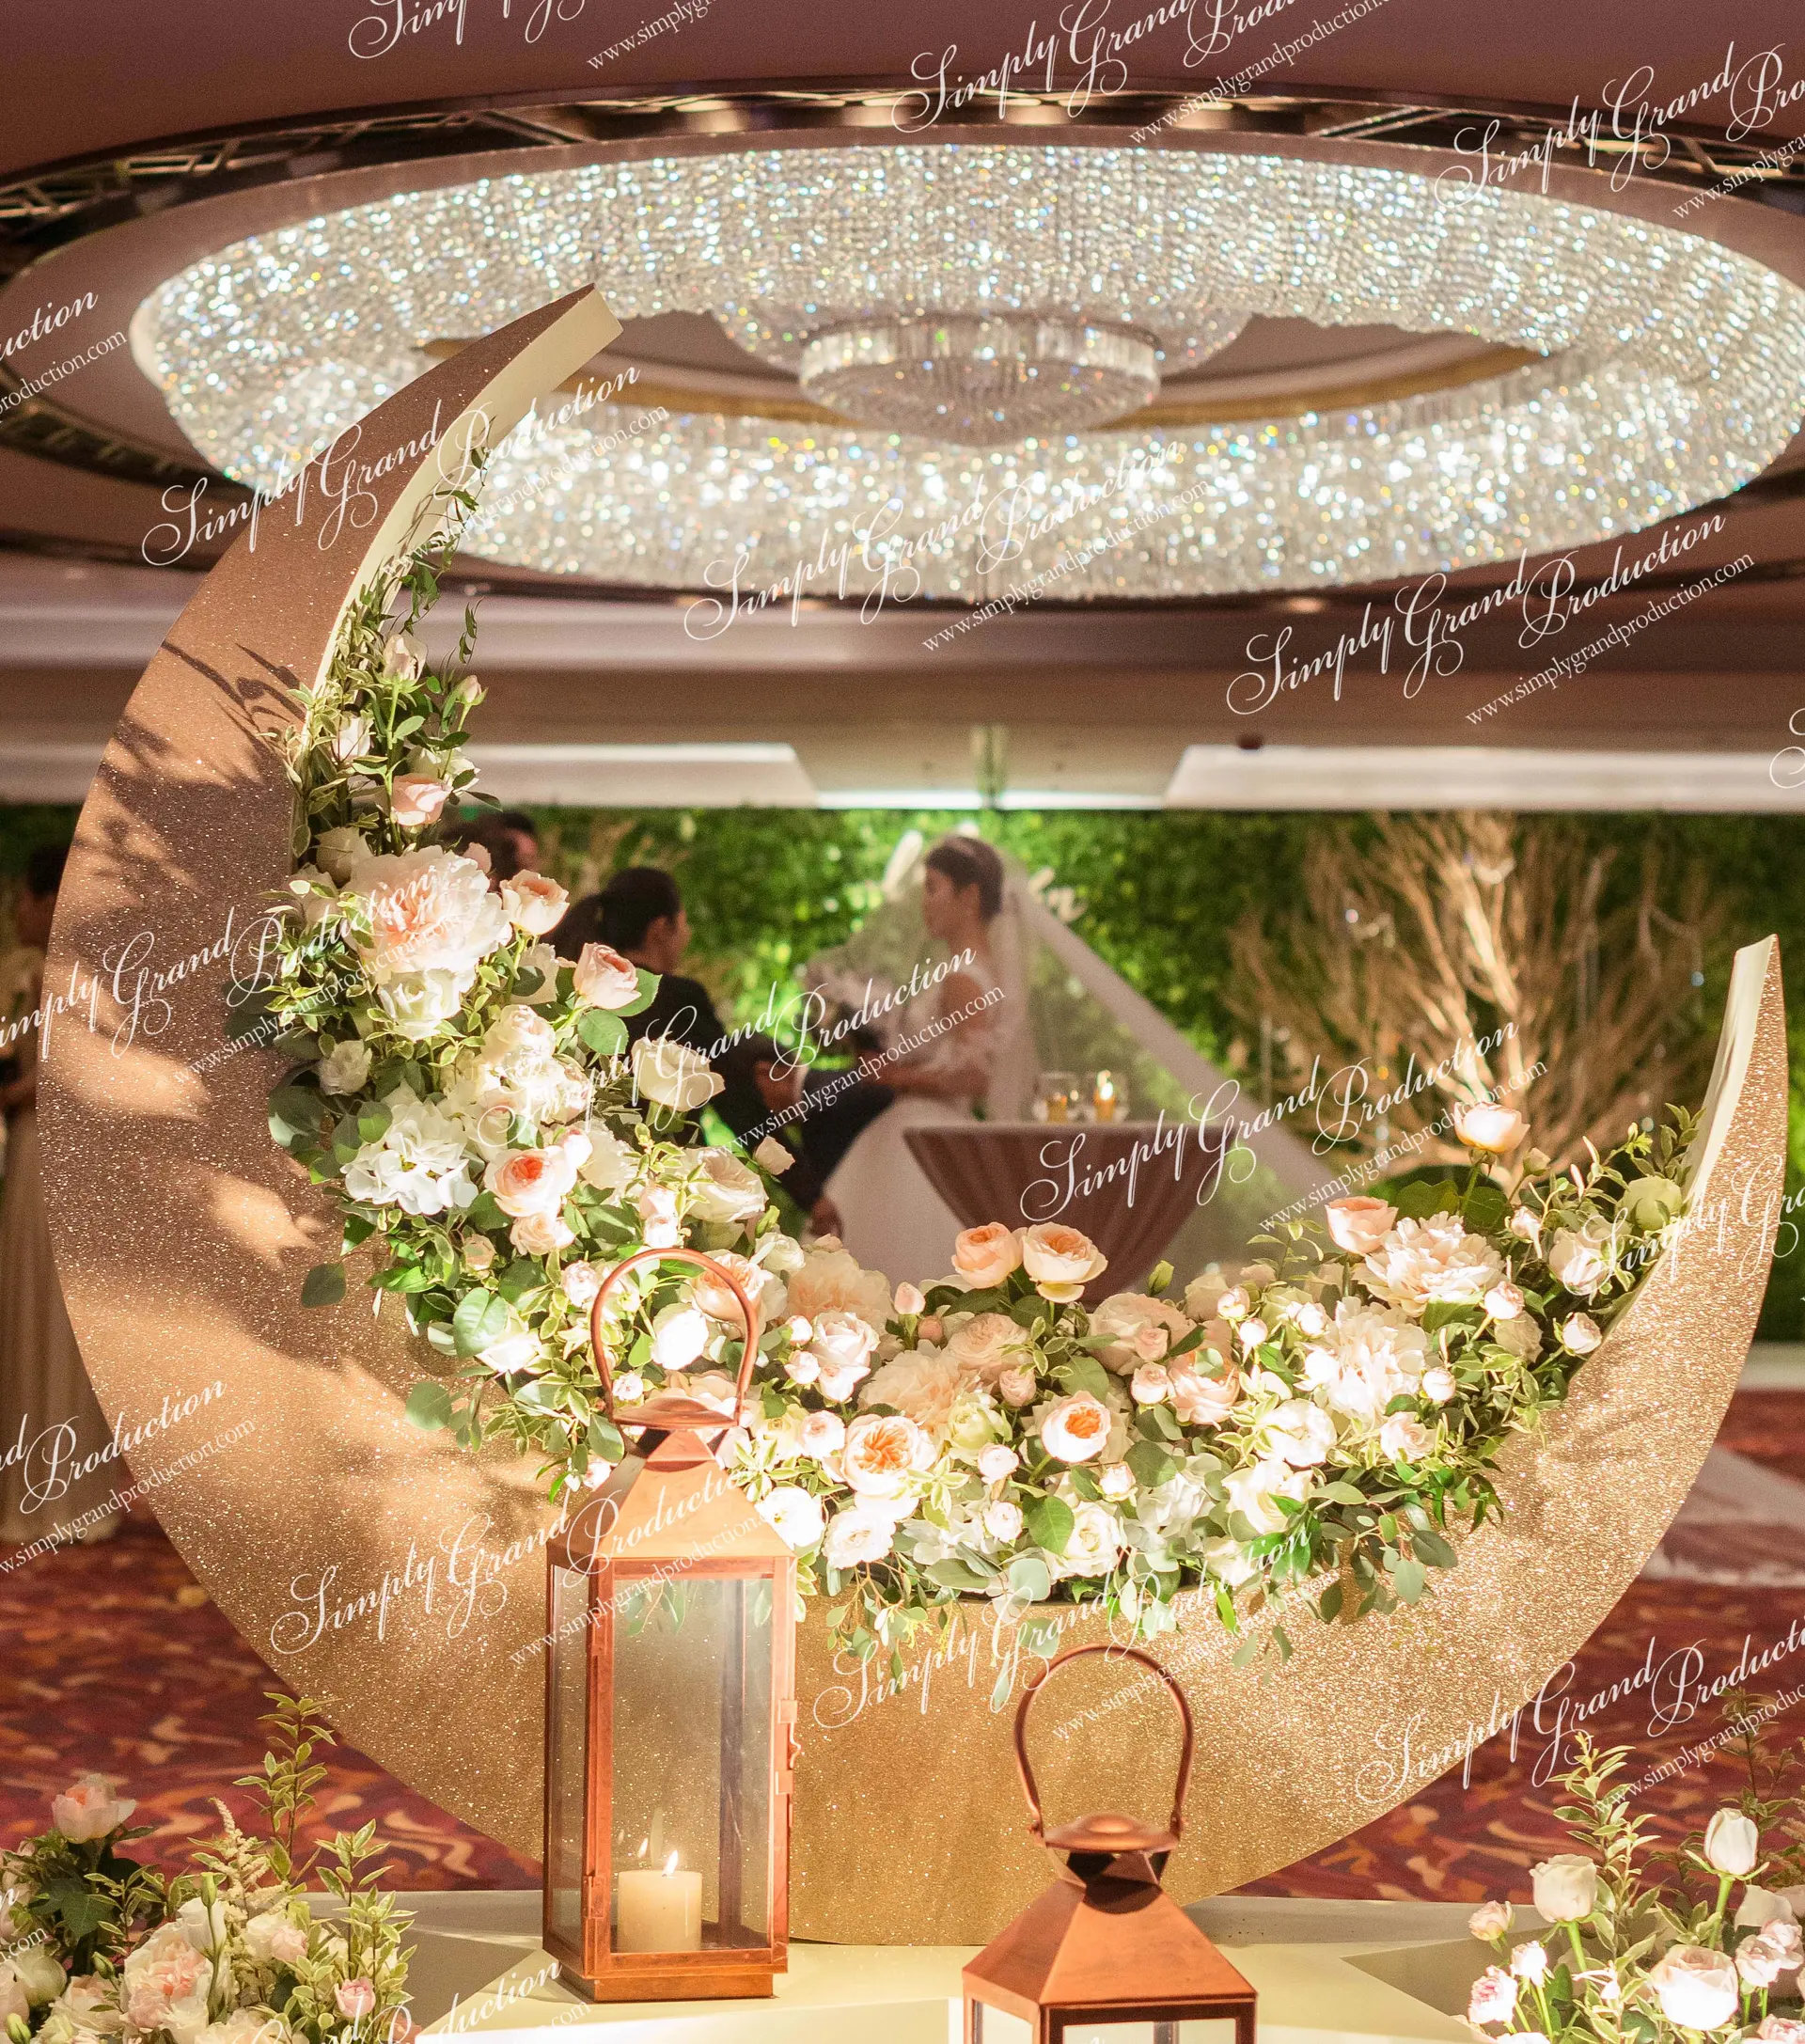 Simply_Grand_Production_Ballroom_wedding_decoration_entrance_moon_floral_lantern_gardenthemewedding_Grand_Hyatt_3_12_wm